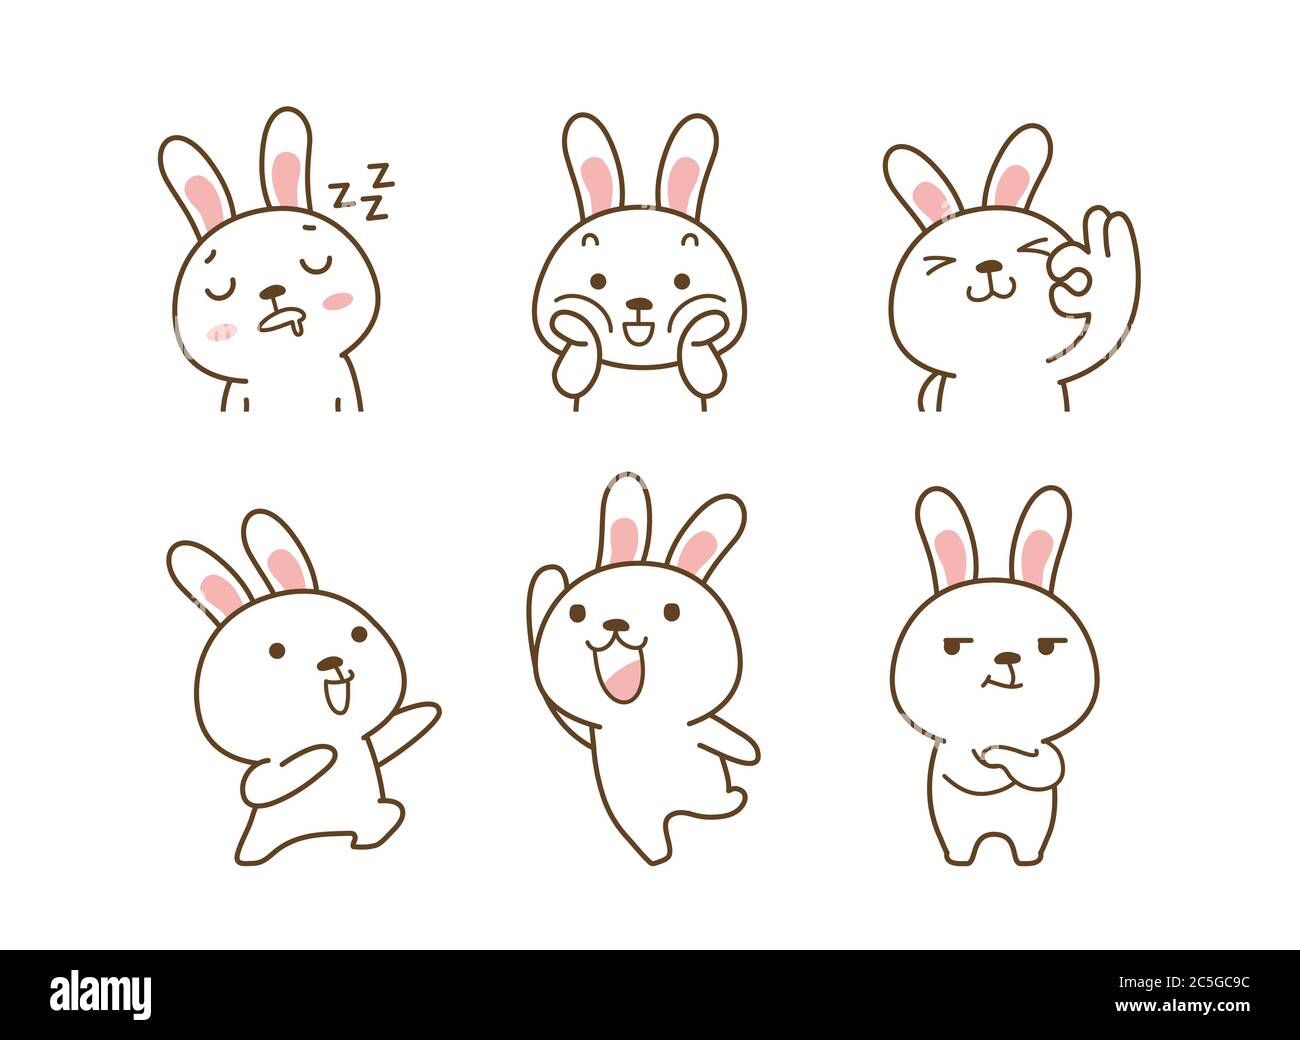 Set of Emoticons. Emoji character cartoon animals illustration 004 Stock Vector